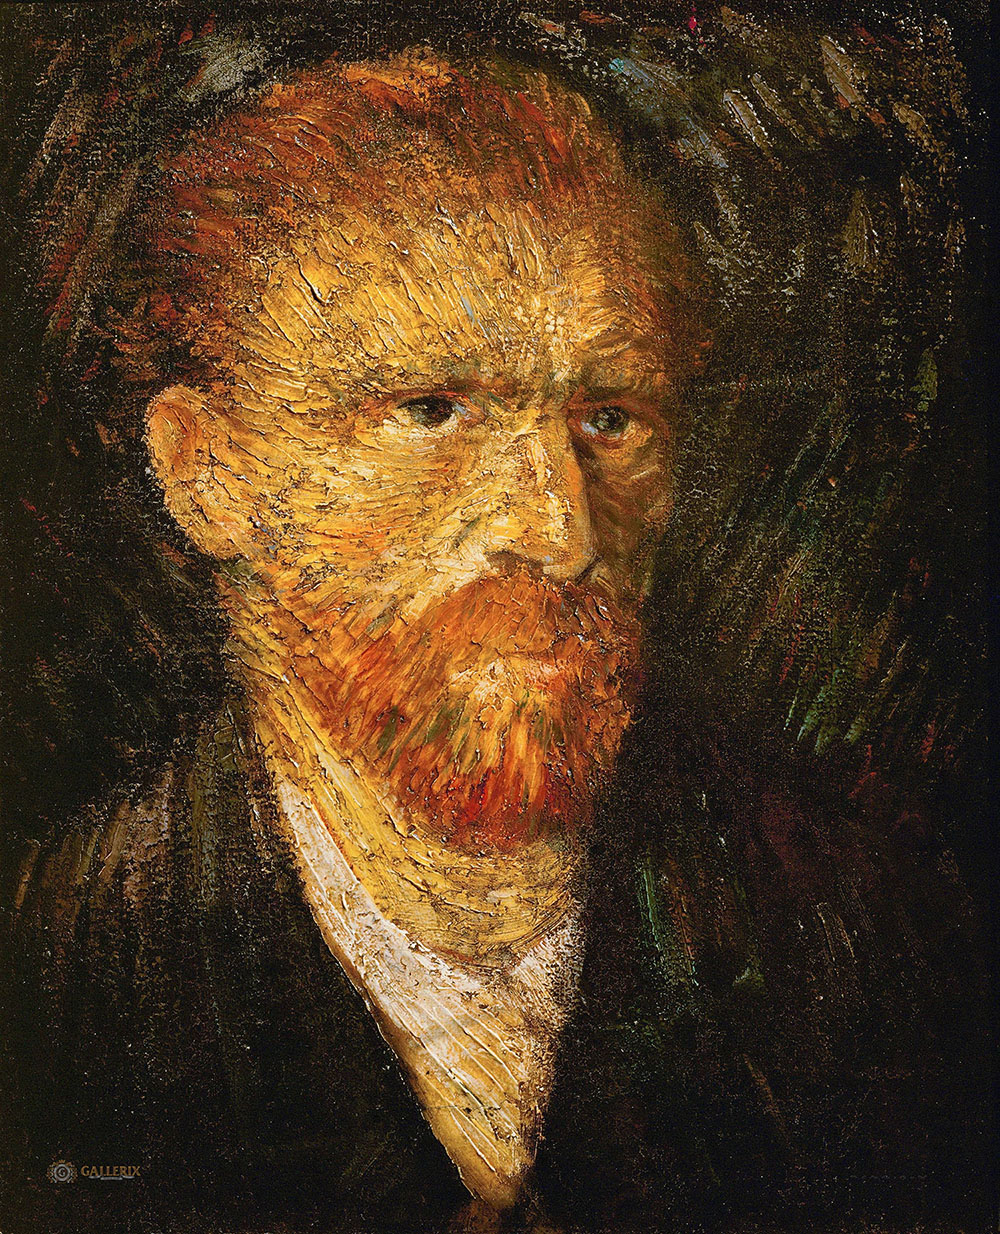 Винсент Ван Гог. "Автопортрет". 1887. Галерея Бельведер, Вена.